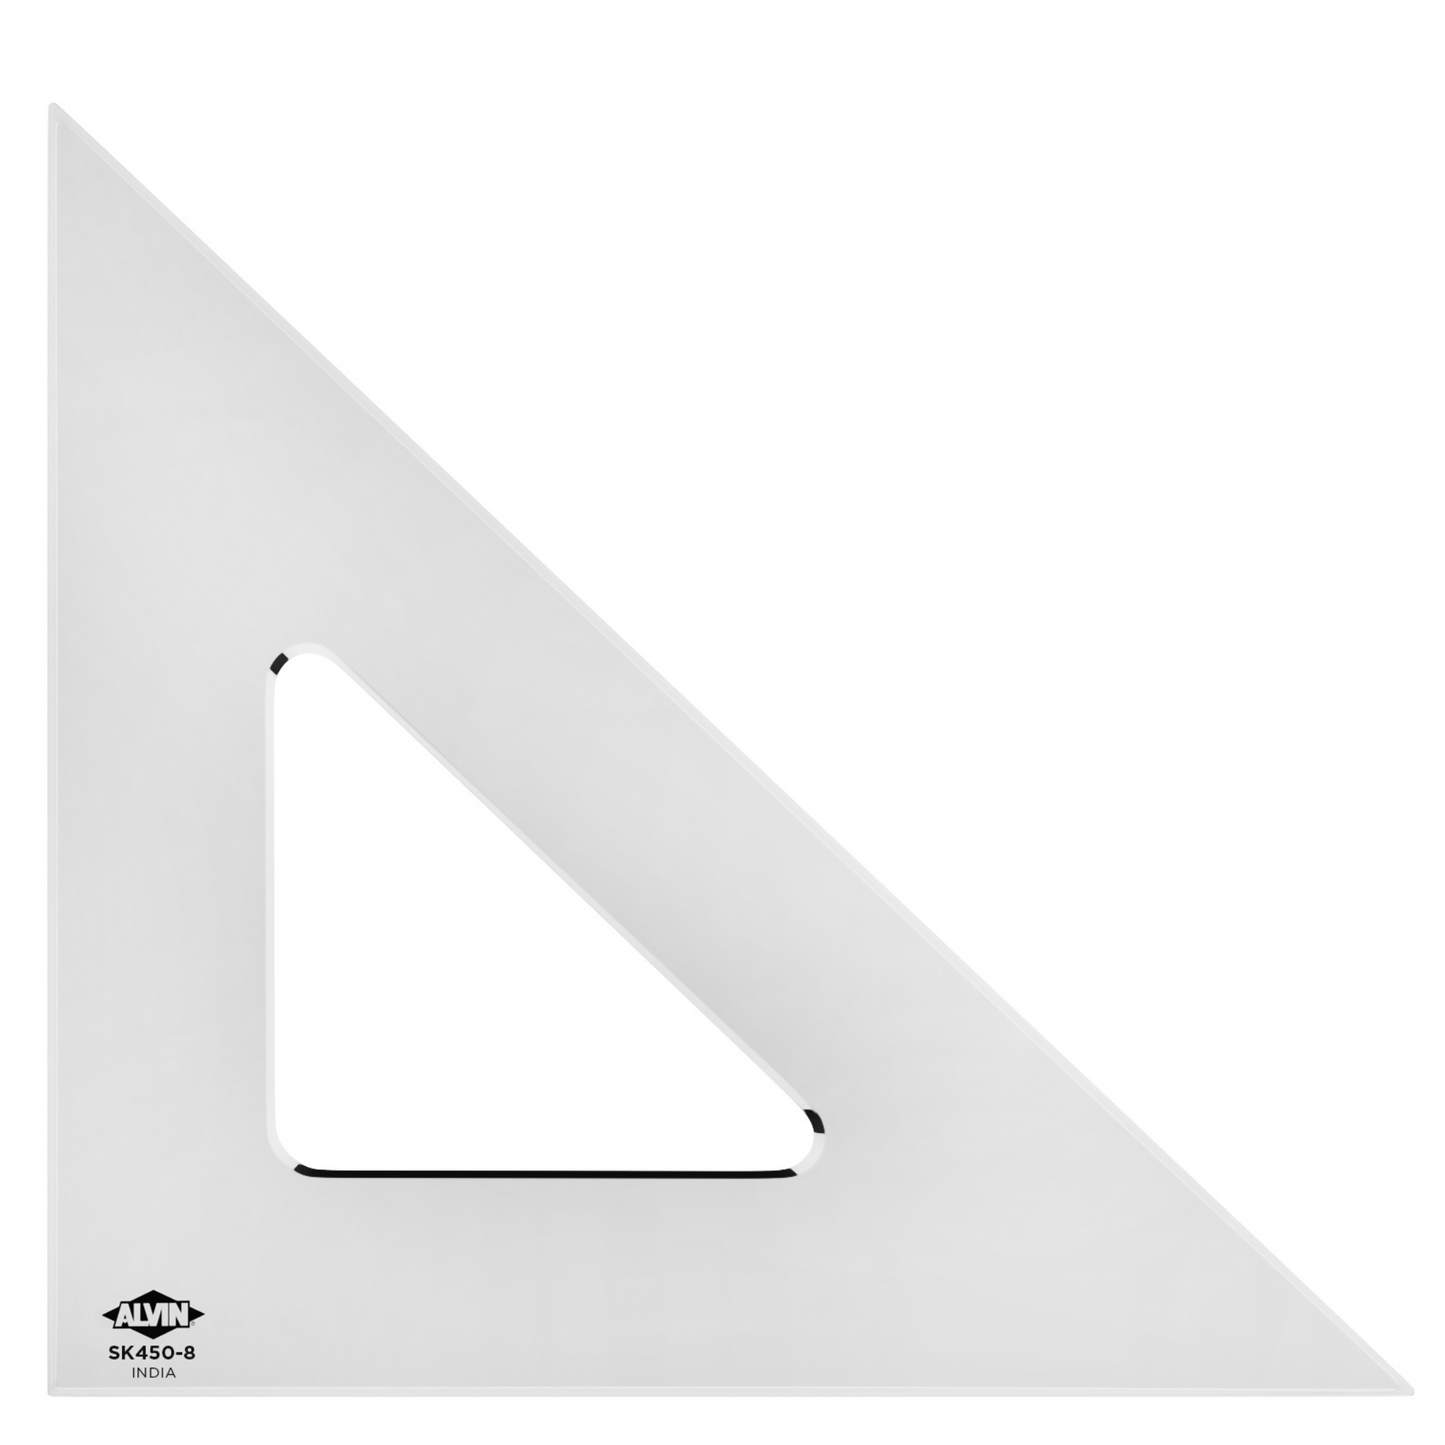 Professional Drafting Triangle (Smoke Tint) 30/60 45/90